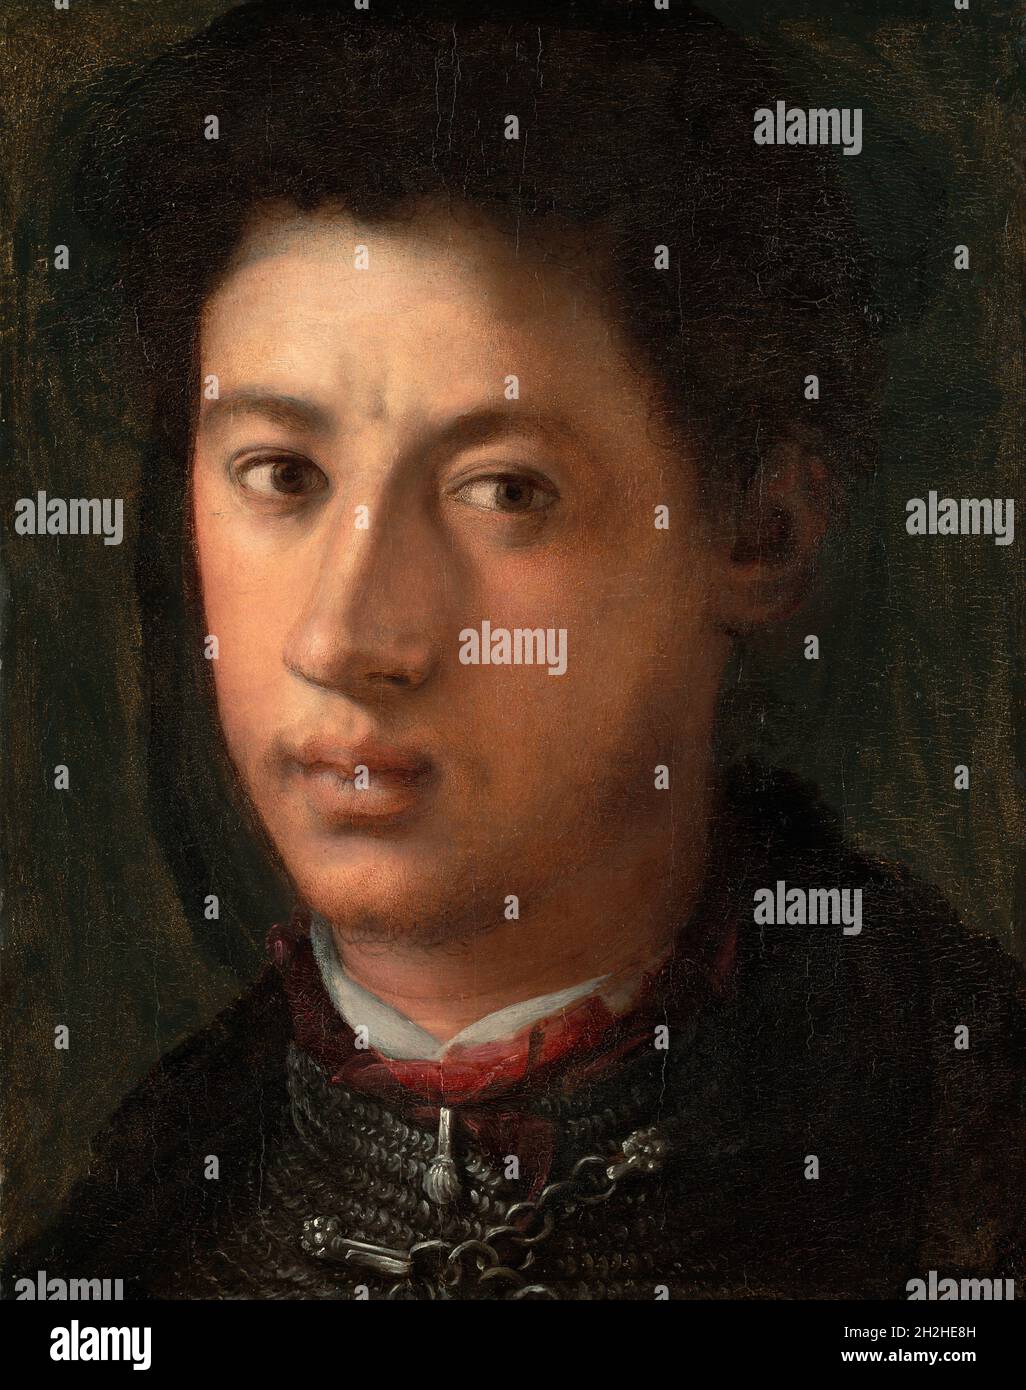 Alessandro de' Medici, 1534/35. Stock Photo